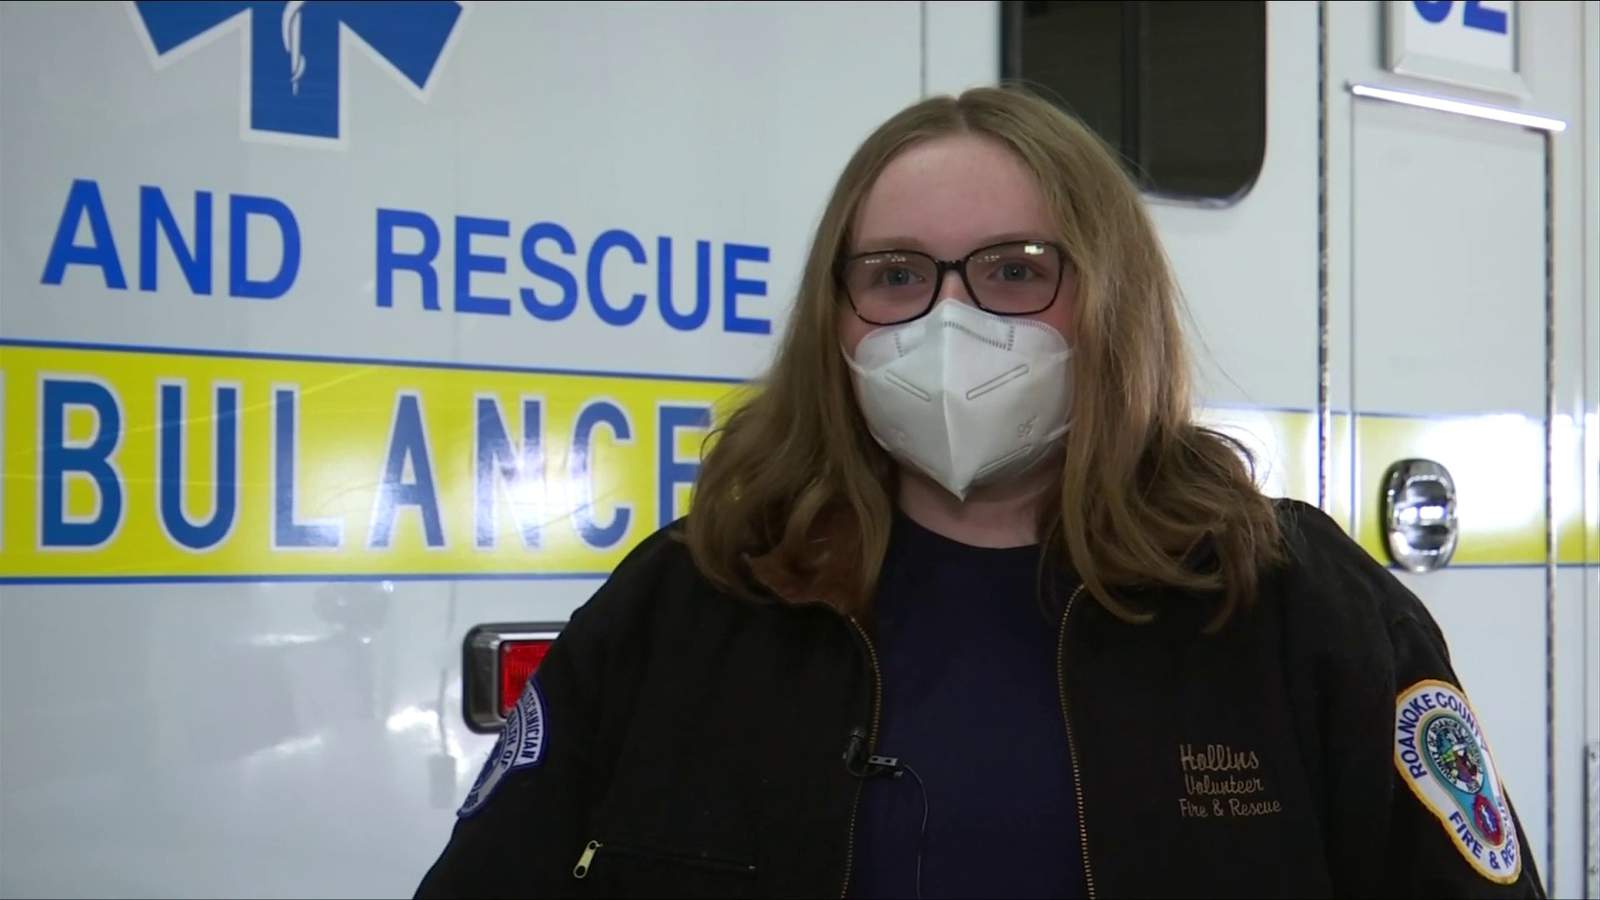 Roanoke County high school senior fulfills her dream by becoming a volunteer EMT